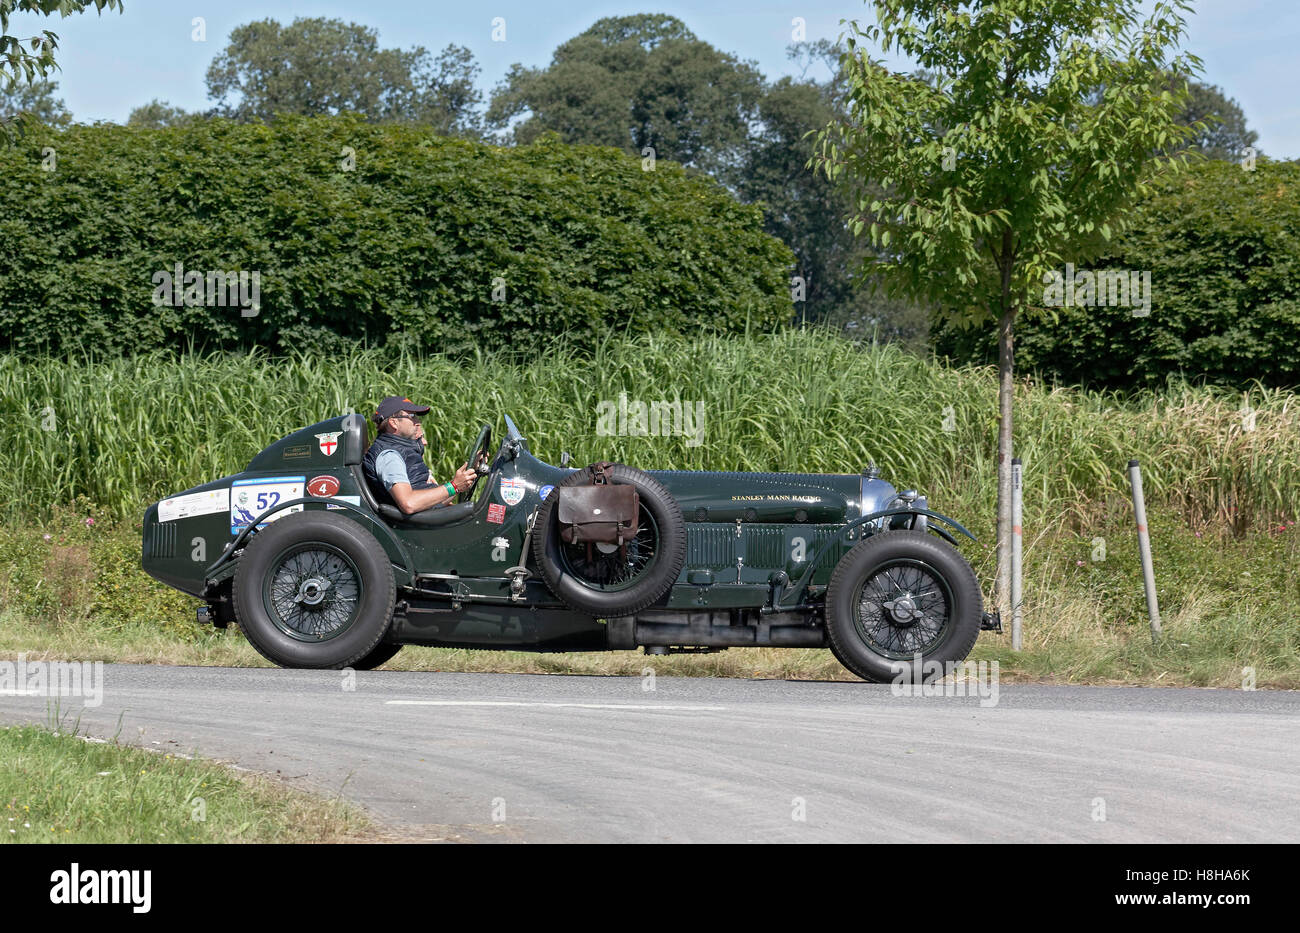 A 3.5 liter supercharged Bentley, built in 1935, Stanley Mann Racing, British classic car, Classic Days Dyck 2016 Jüchen Stock Photo